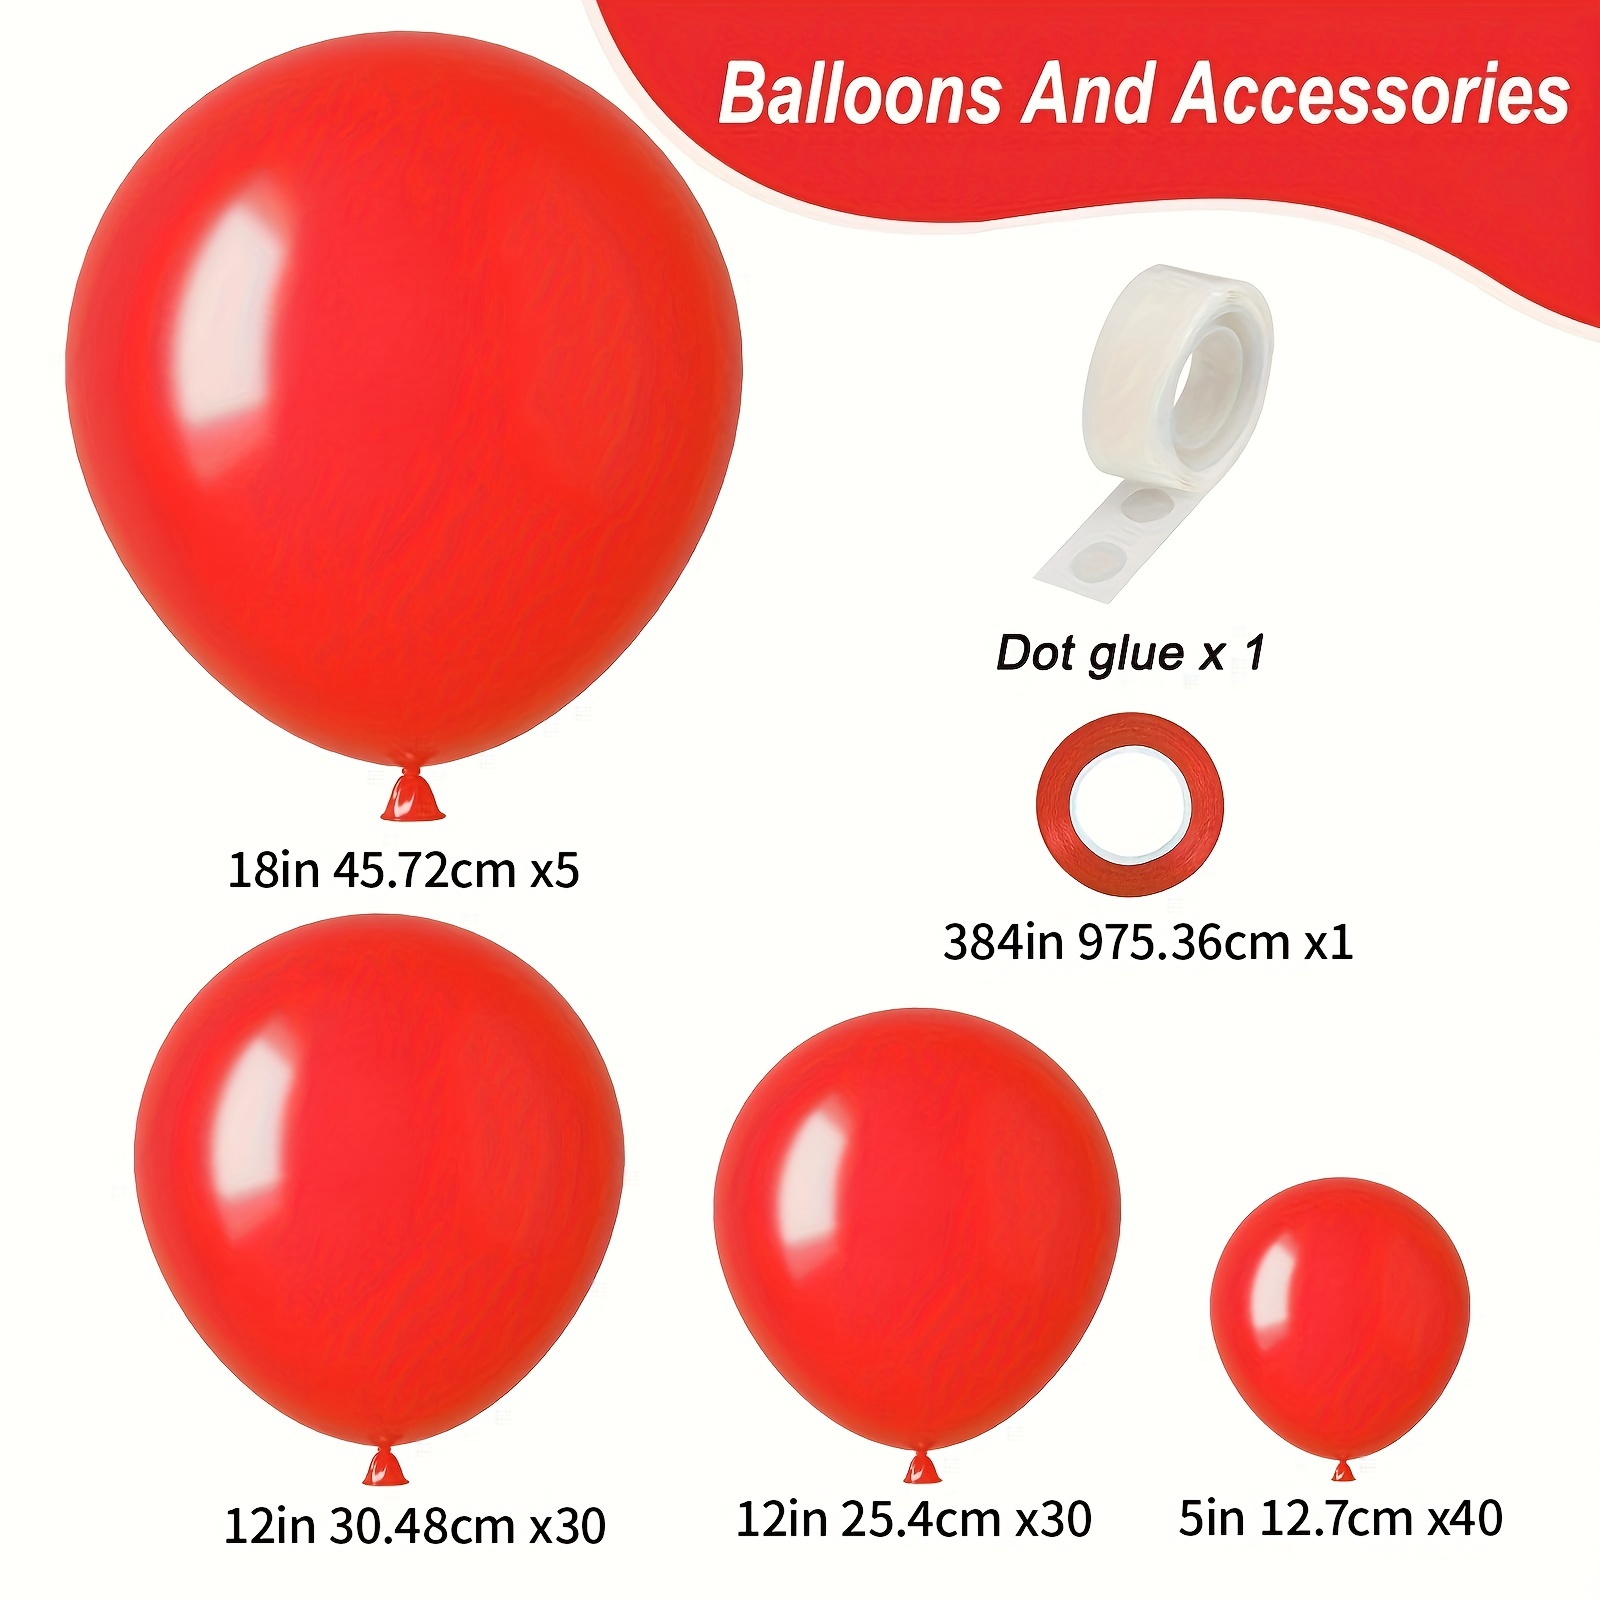 Premium Balloon Accessories